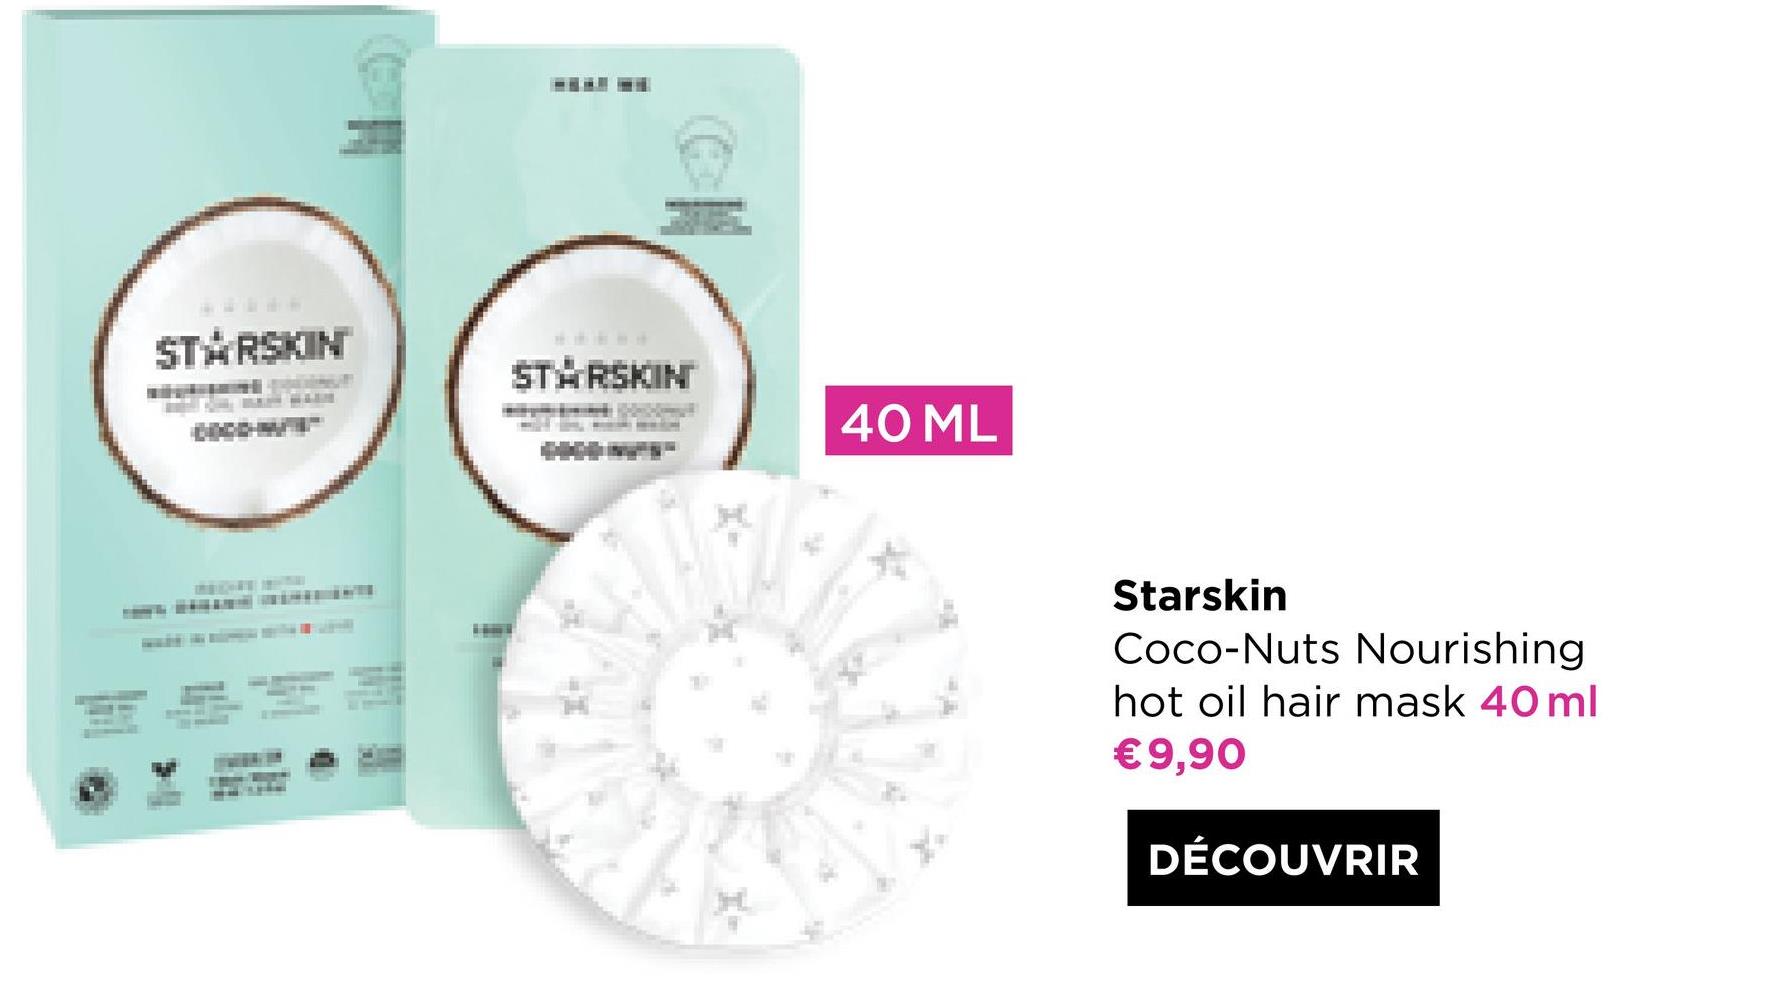 STARSKIN
STRSKIN
40 ML
Starskin
Coco-Nuts Nourishing
hot oil hair mask 40 ml
€9,90
DÉCOUVRIR
